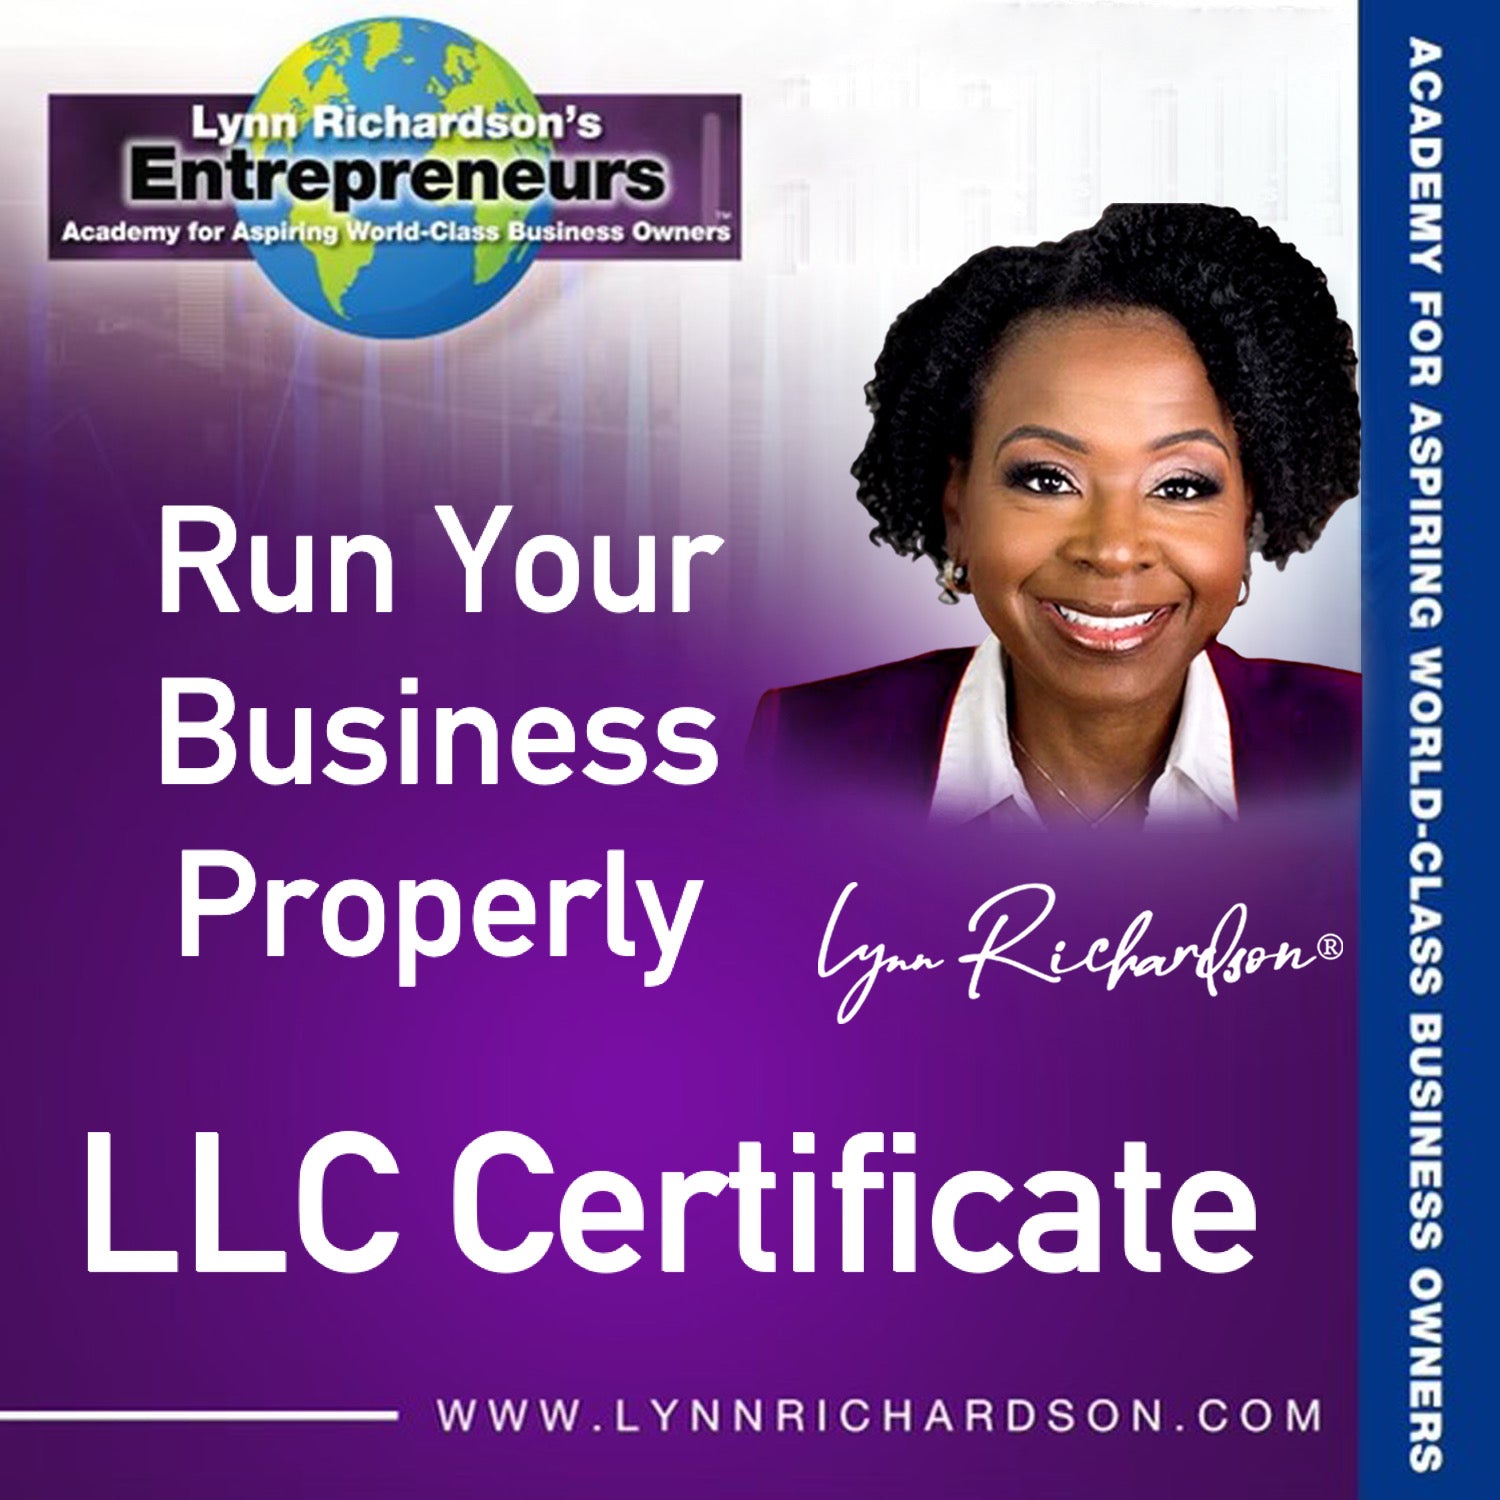 LLC Certificate for Sole Proprietors - $399 - Code JORDAN50